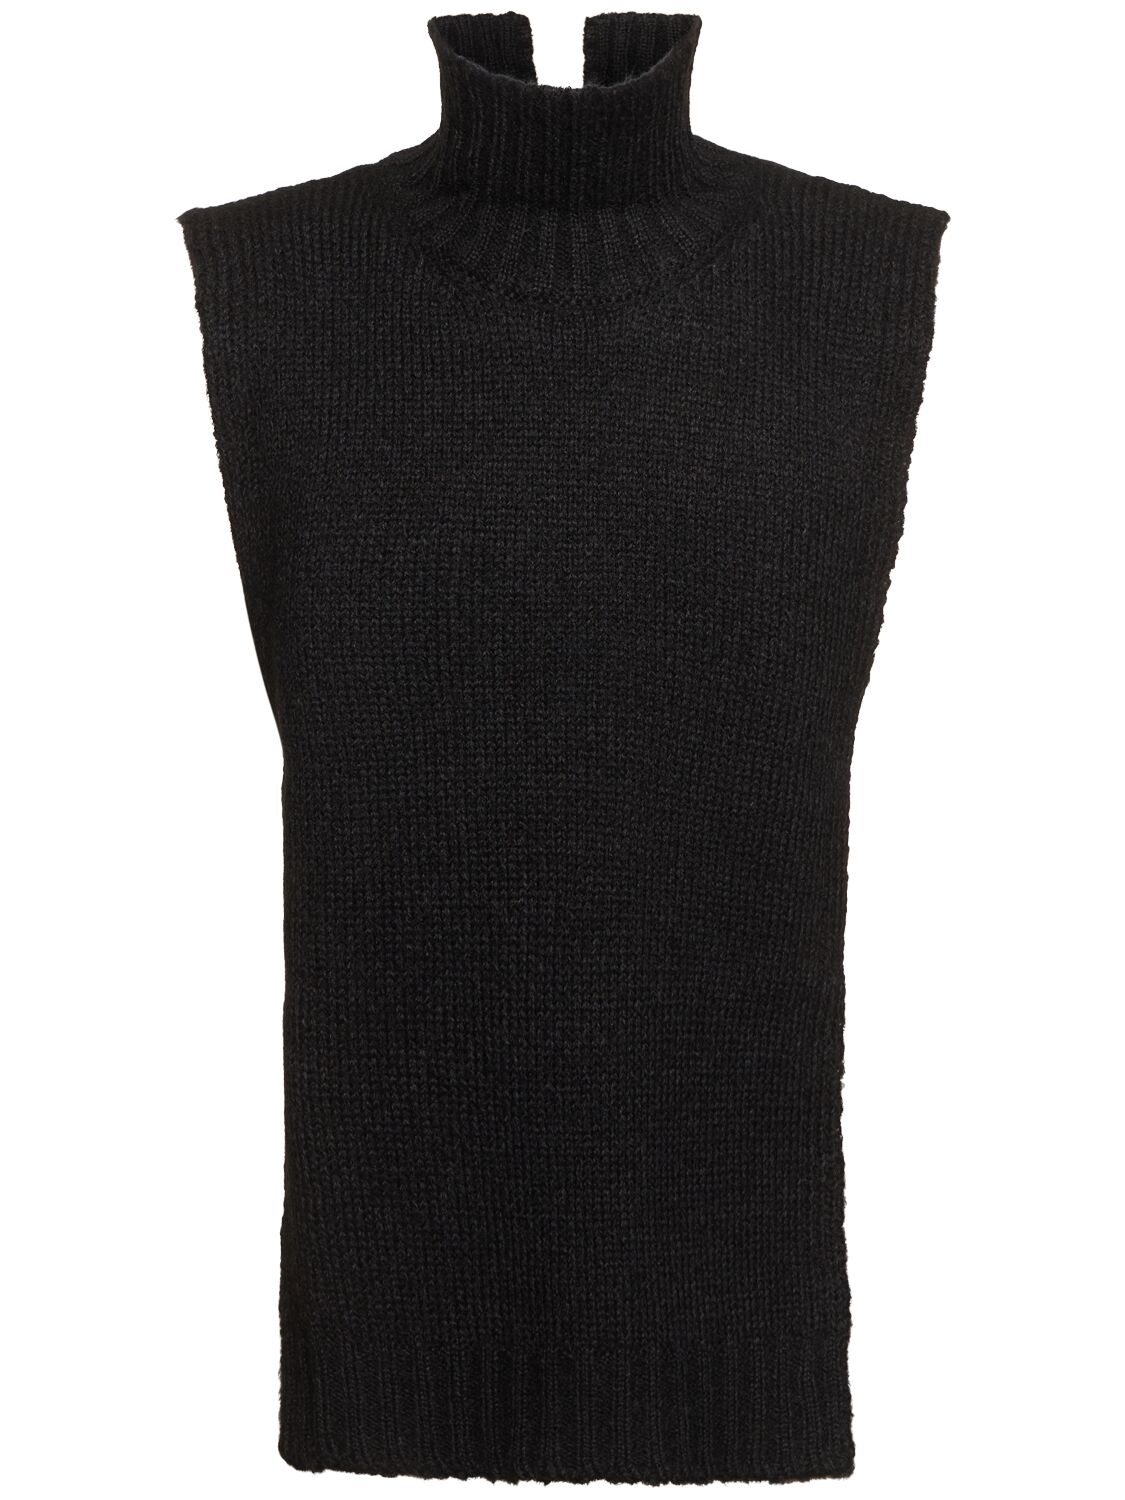 Image of High Neck Knit Vest